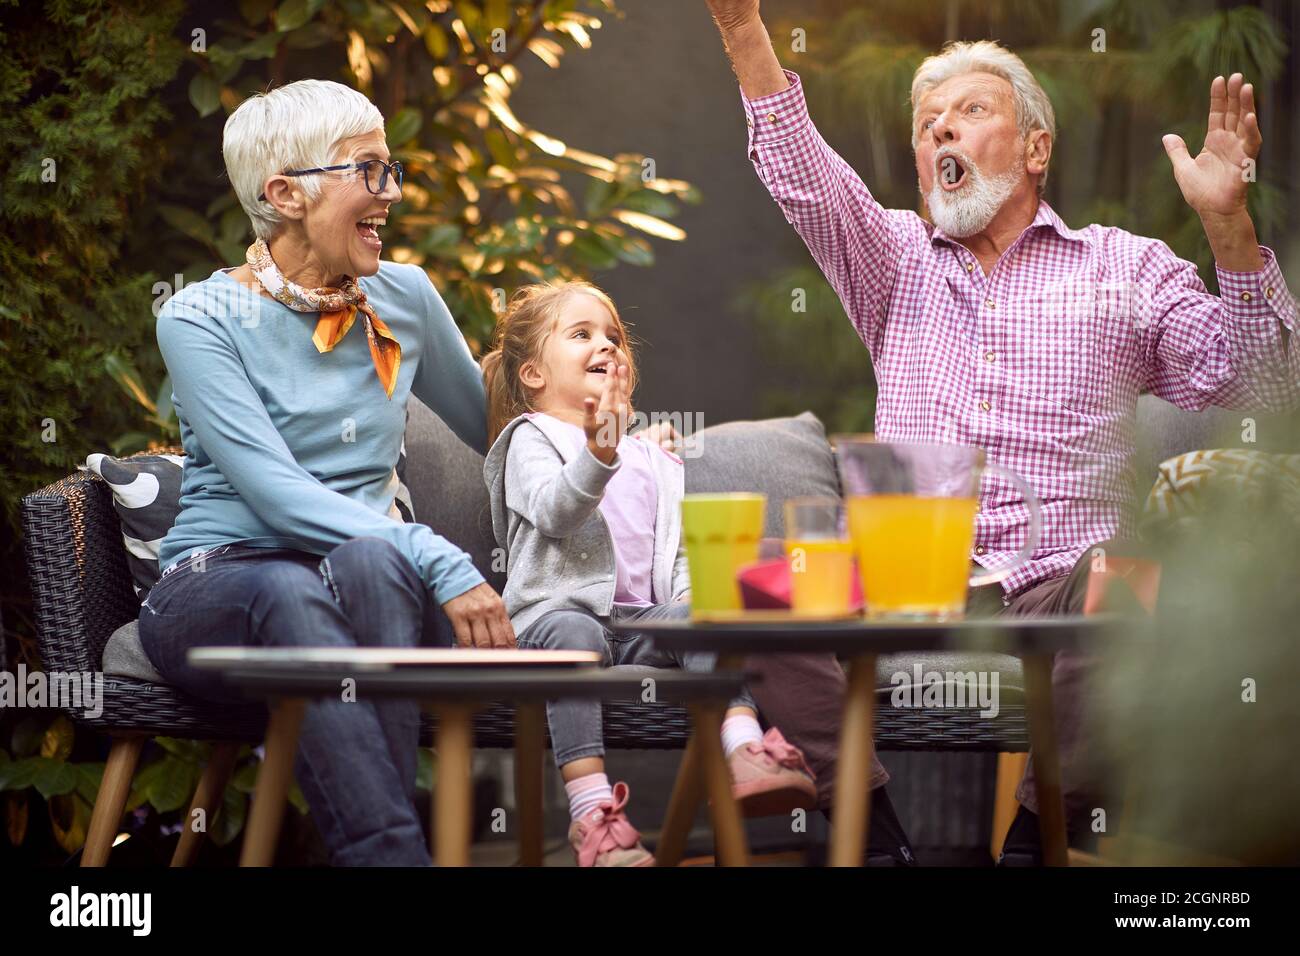 caucasian grandpa amusing granddaughter with her grandma Stock Photo